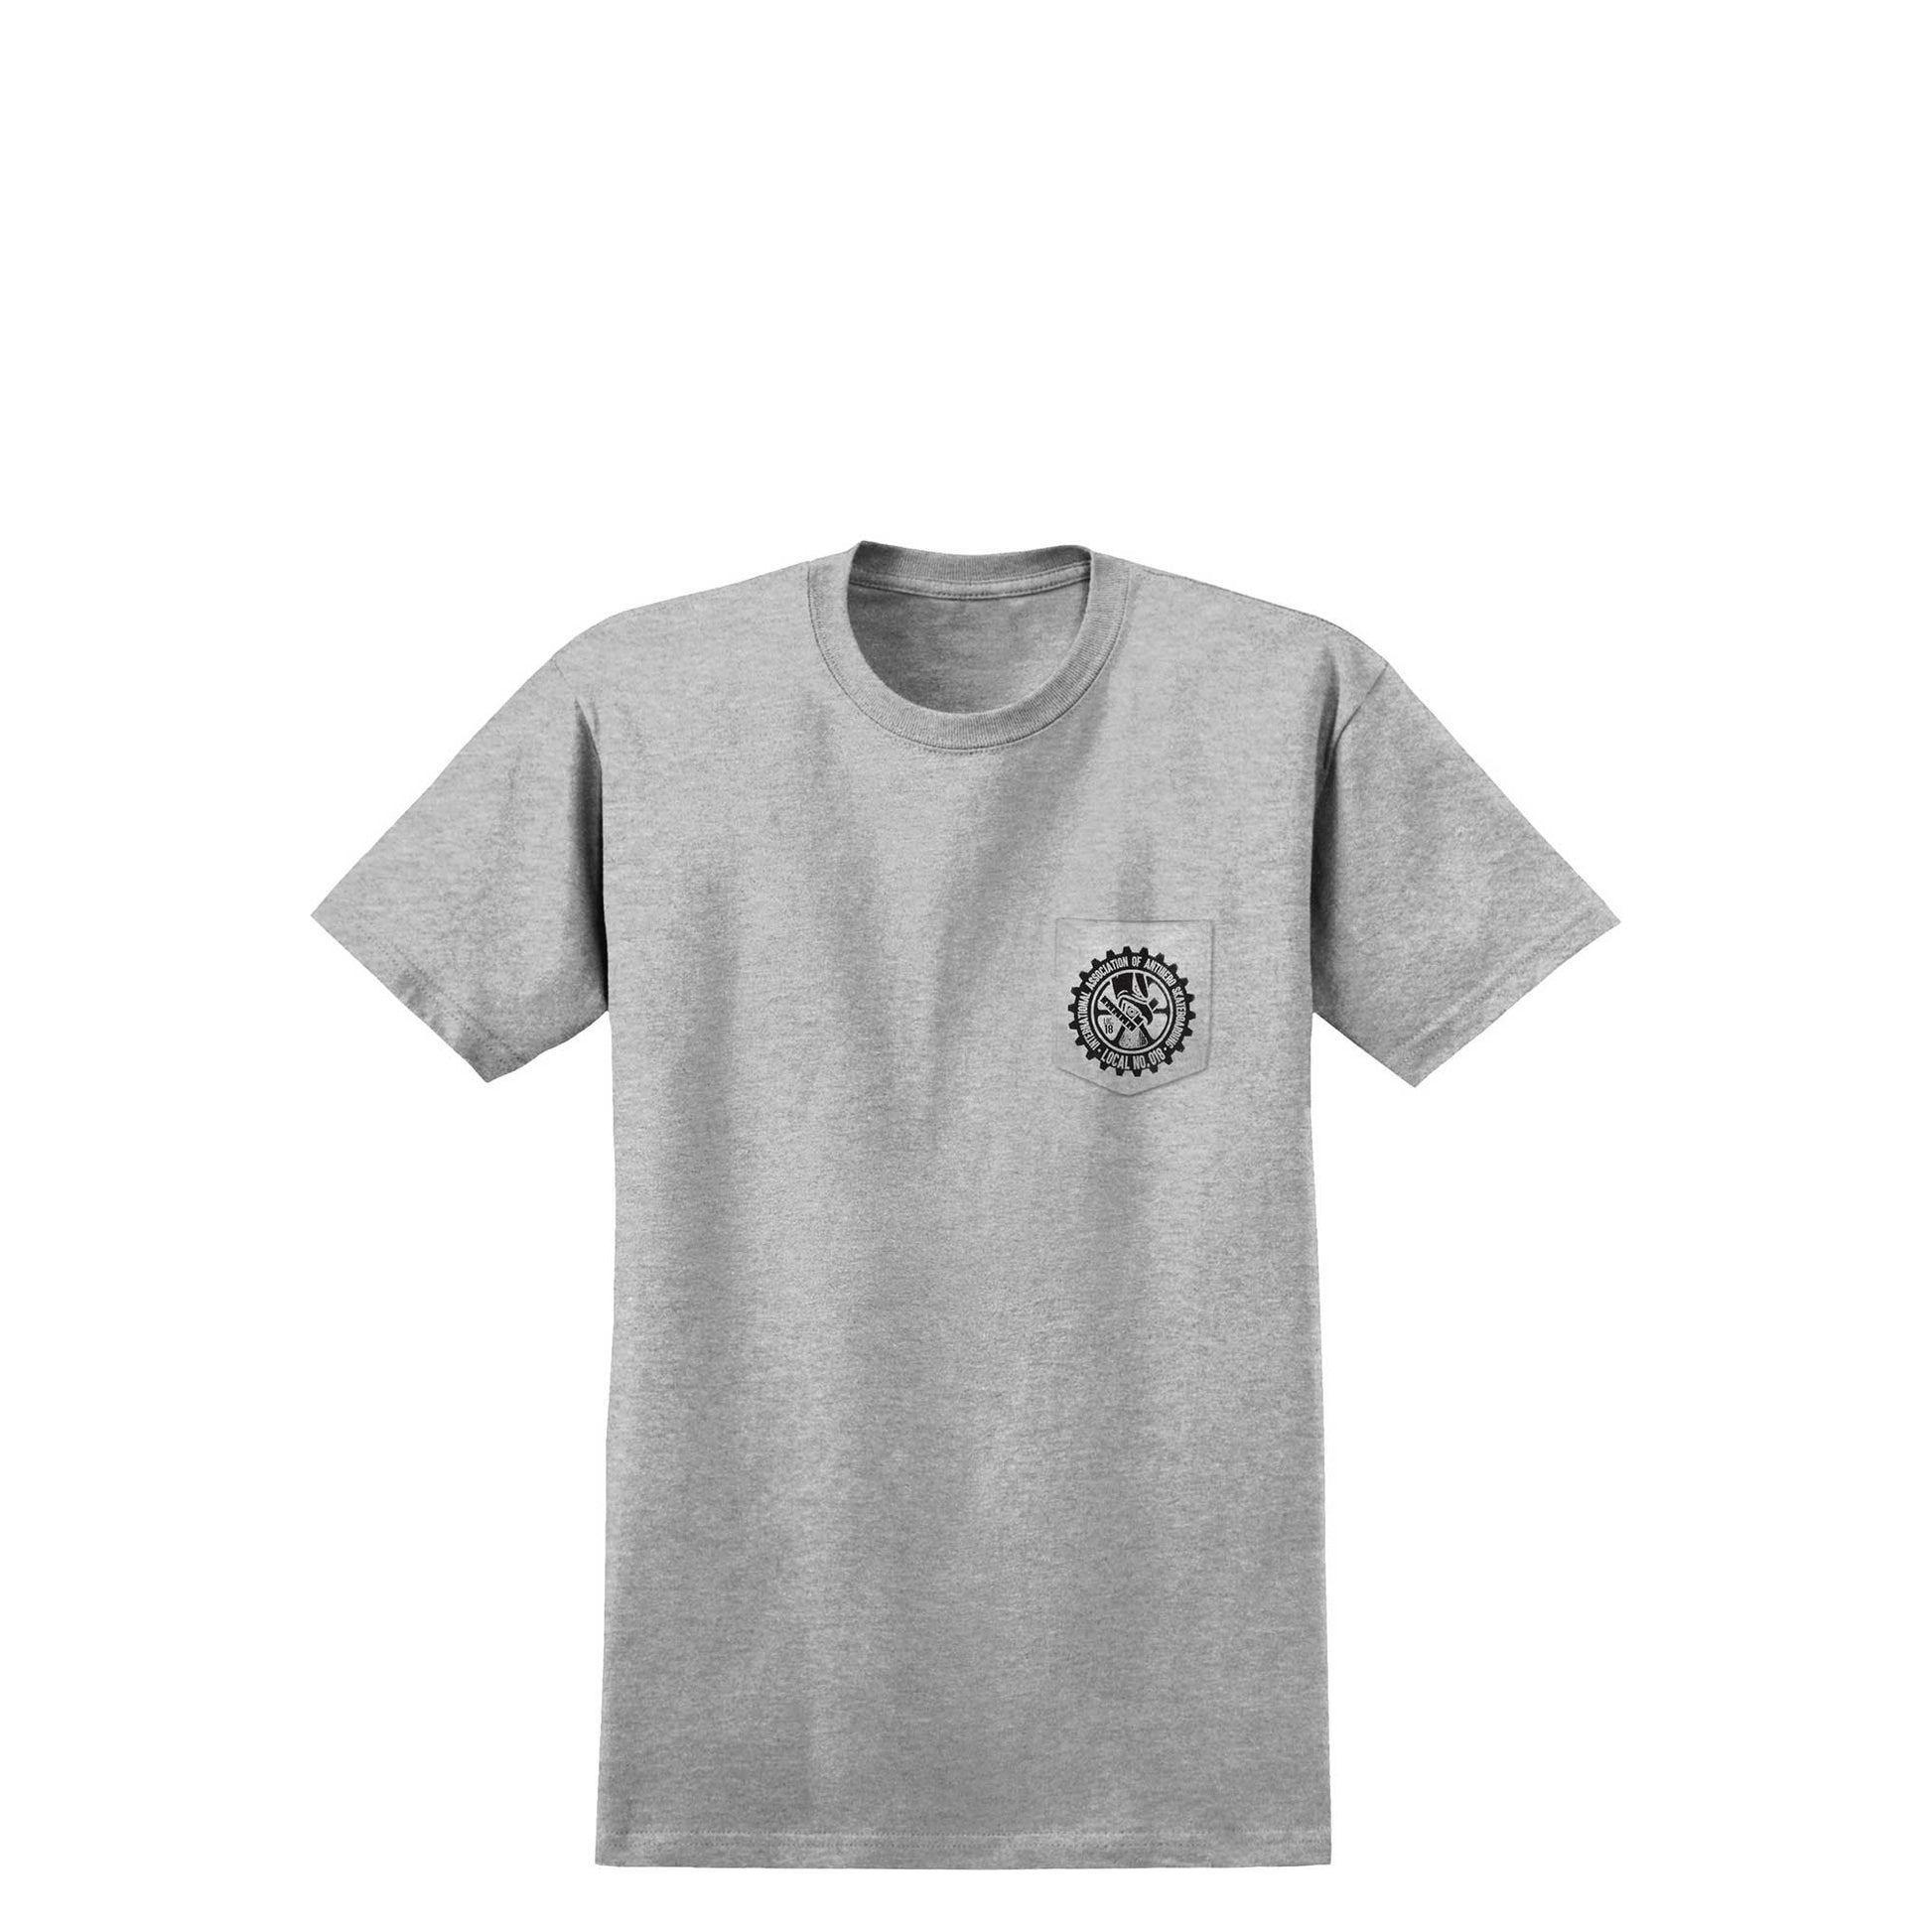 Anti Hero Union18 Eagle Pocket T-Shirt, athletic heather w black prints - Tiki Room Skateboards - 2